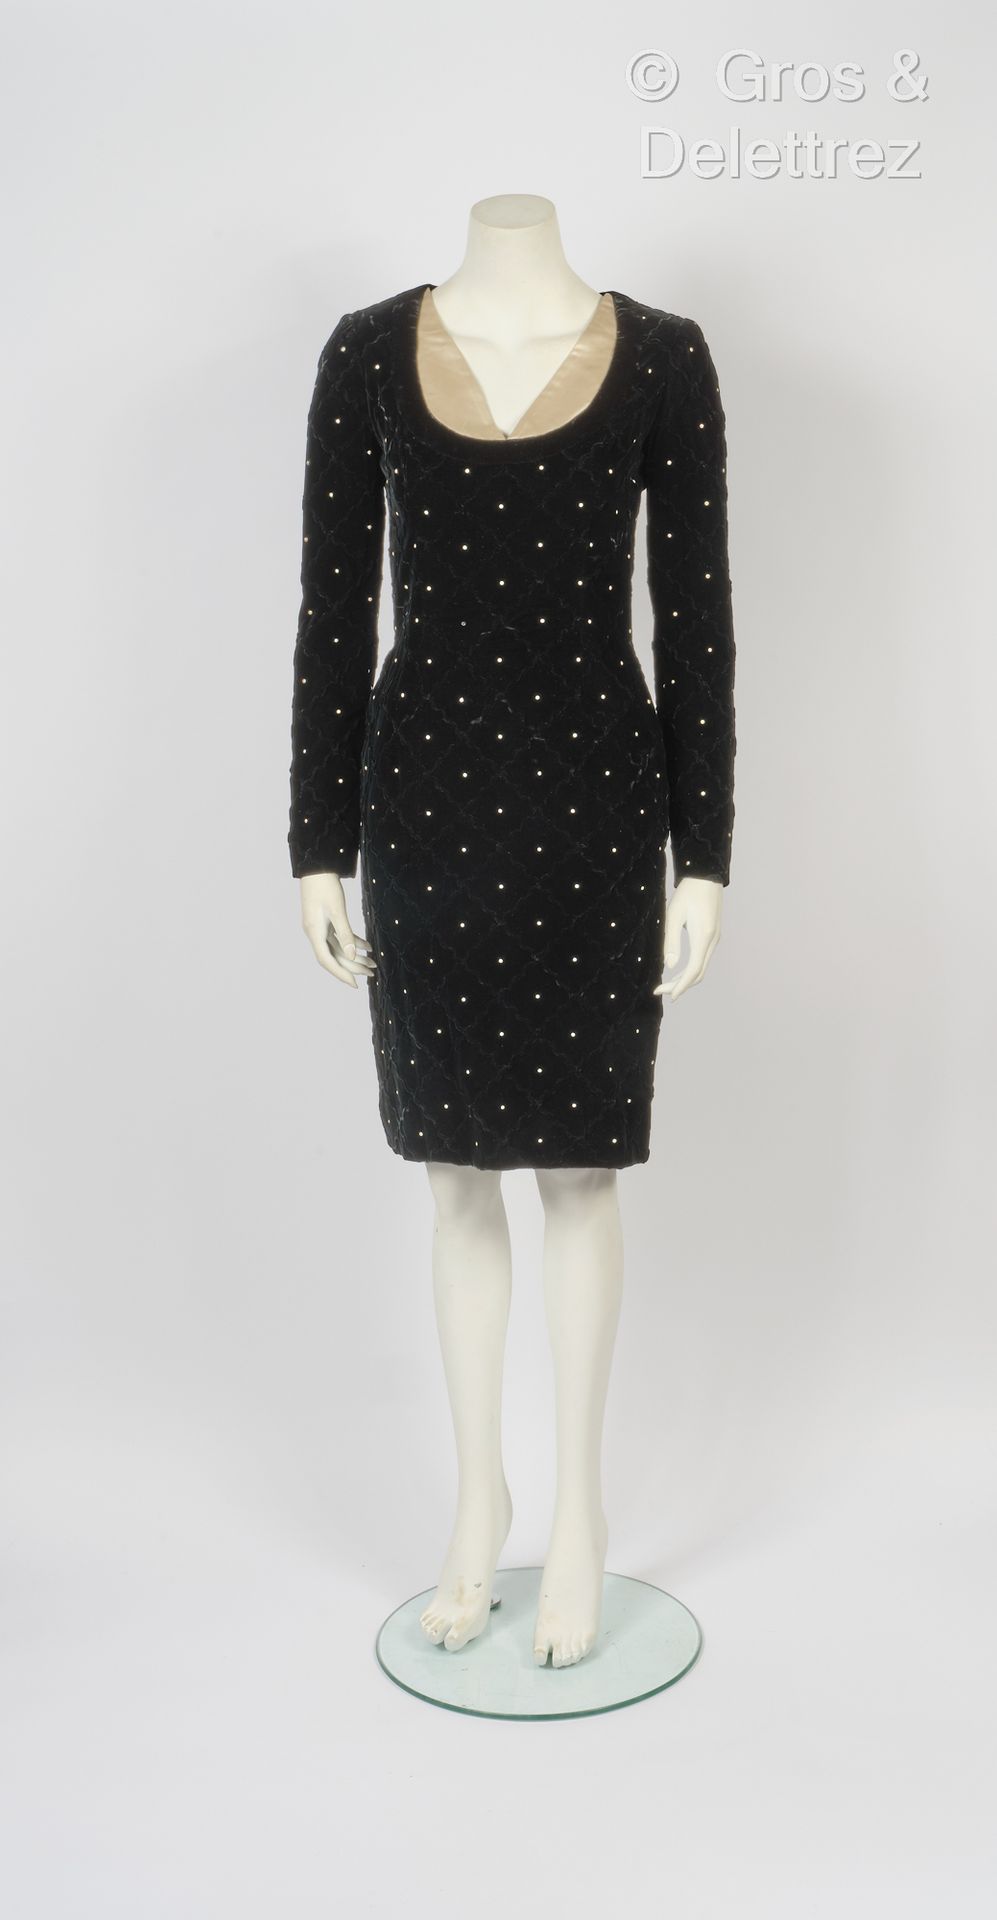 LANVIN Circa 1980
Robe en velours de coton noir agrémenté de perles blanches d’i&hellip;